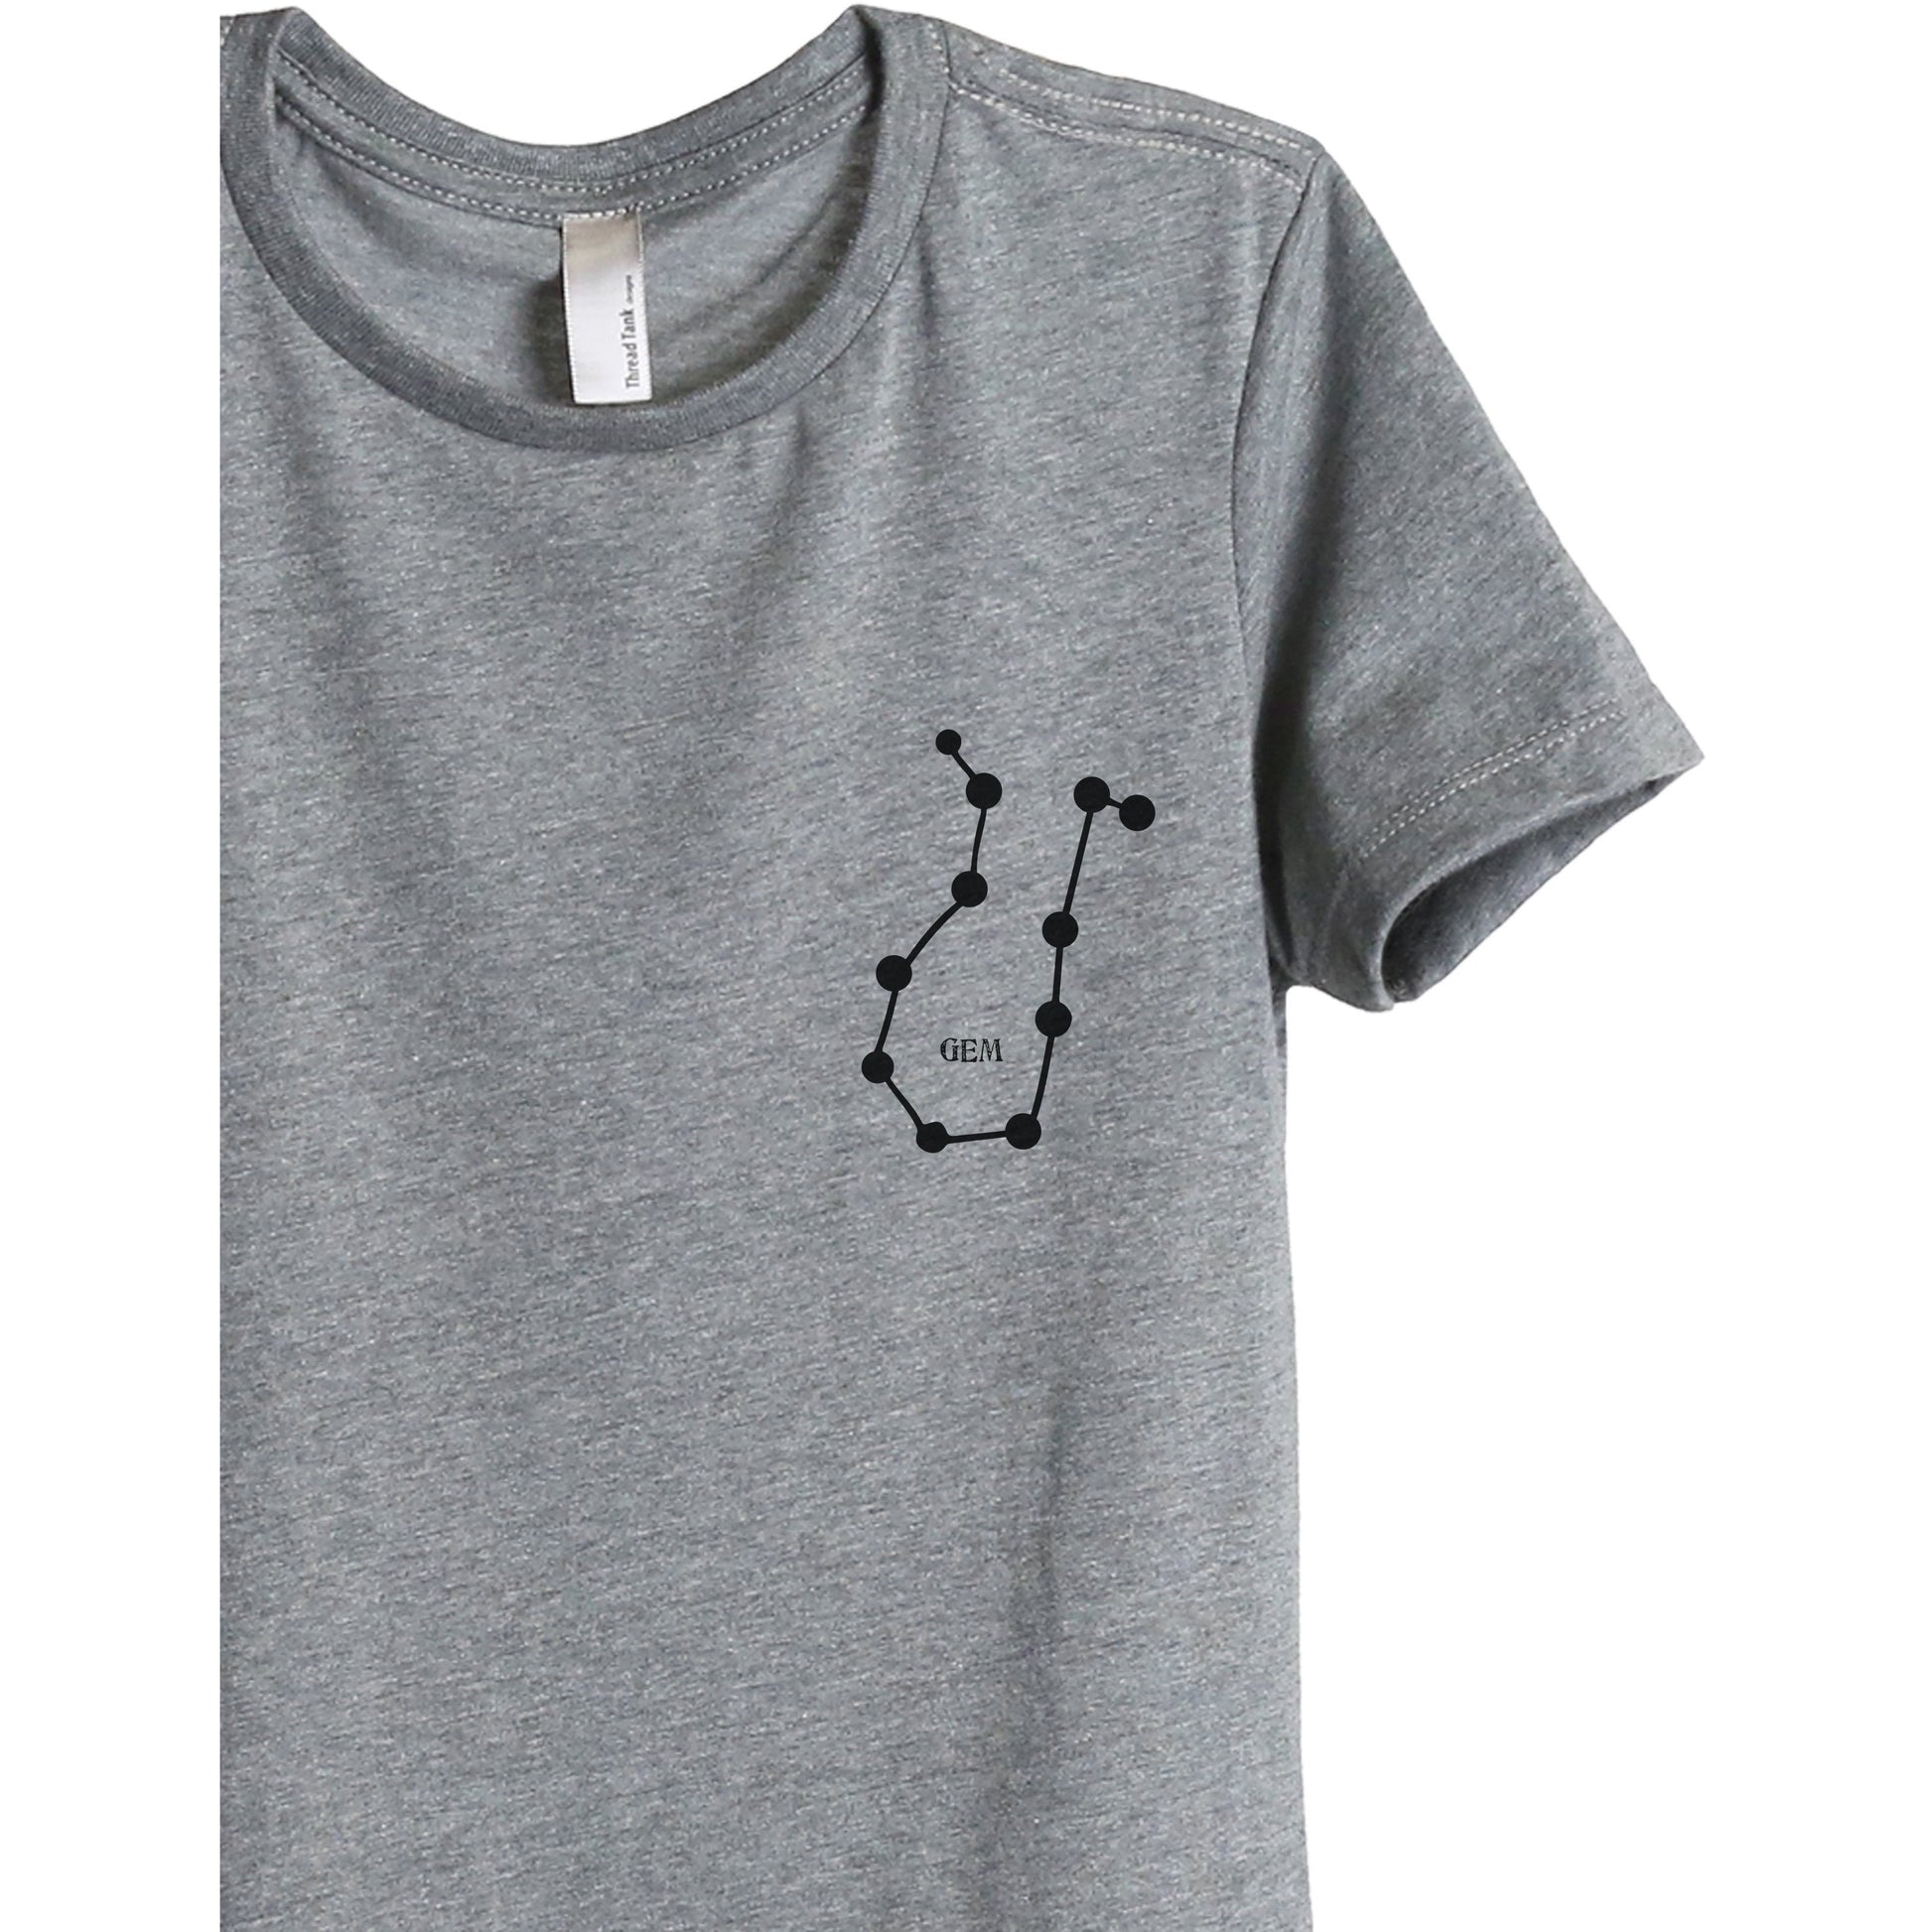 Gemini GEM Constellation Astrology Women's Relaxed Crewneck T-Shirt Top Tee Heather Grey Zoom Details
